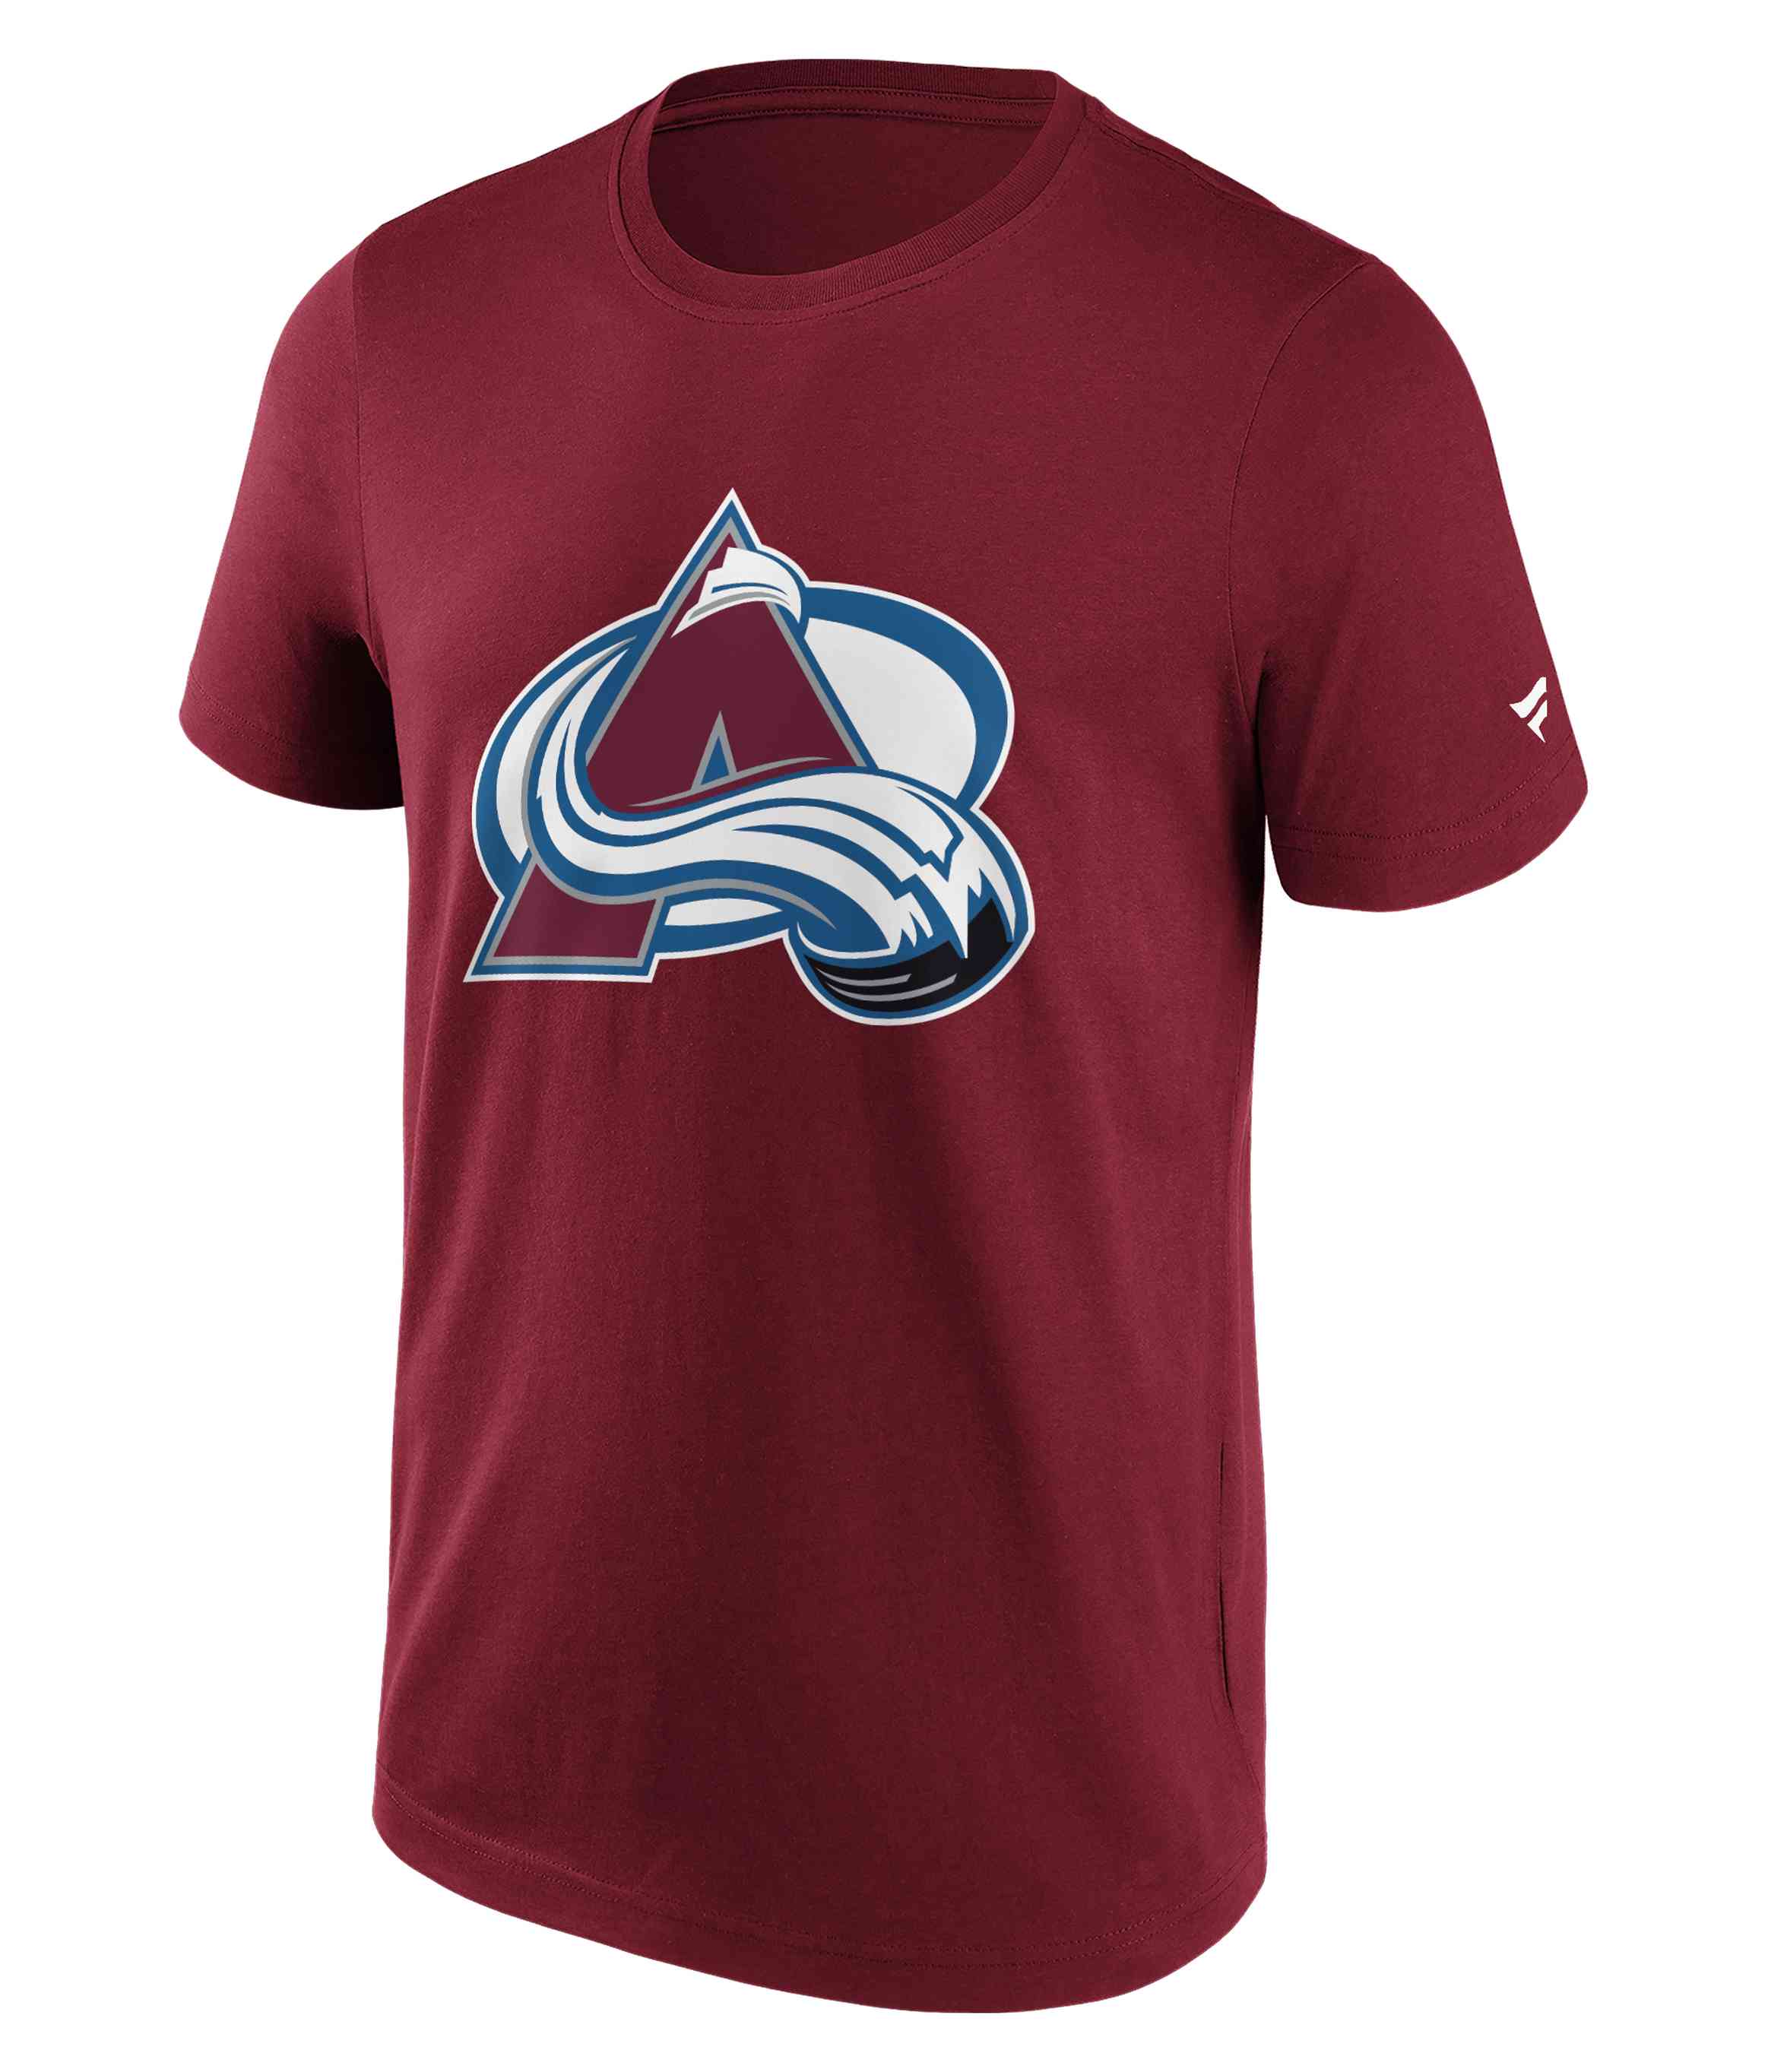 Fanatics - NHL Colorado Avalanche Primary Logo Graphic T-Shirt